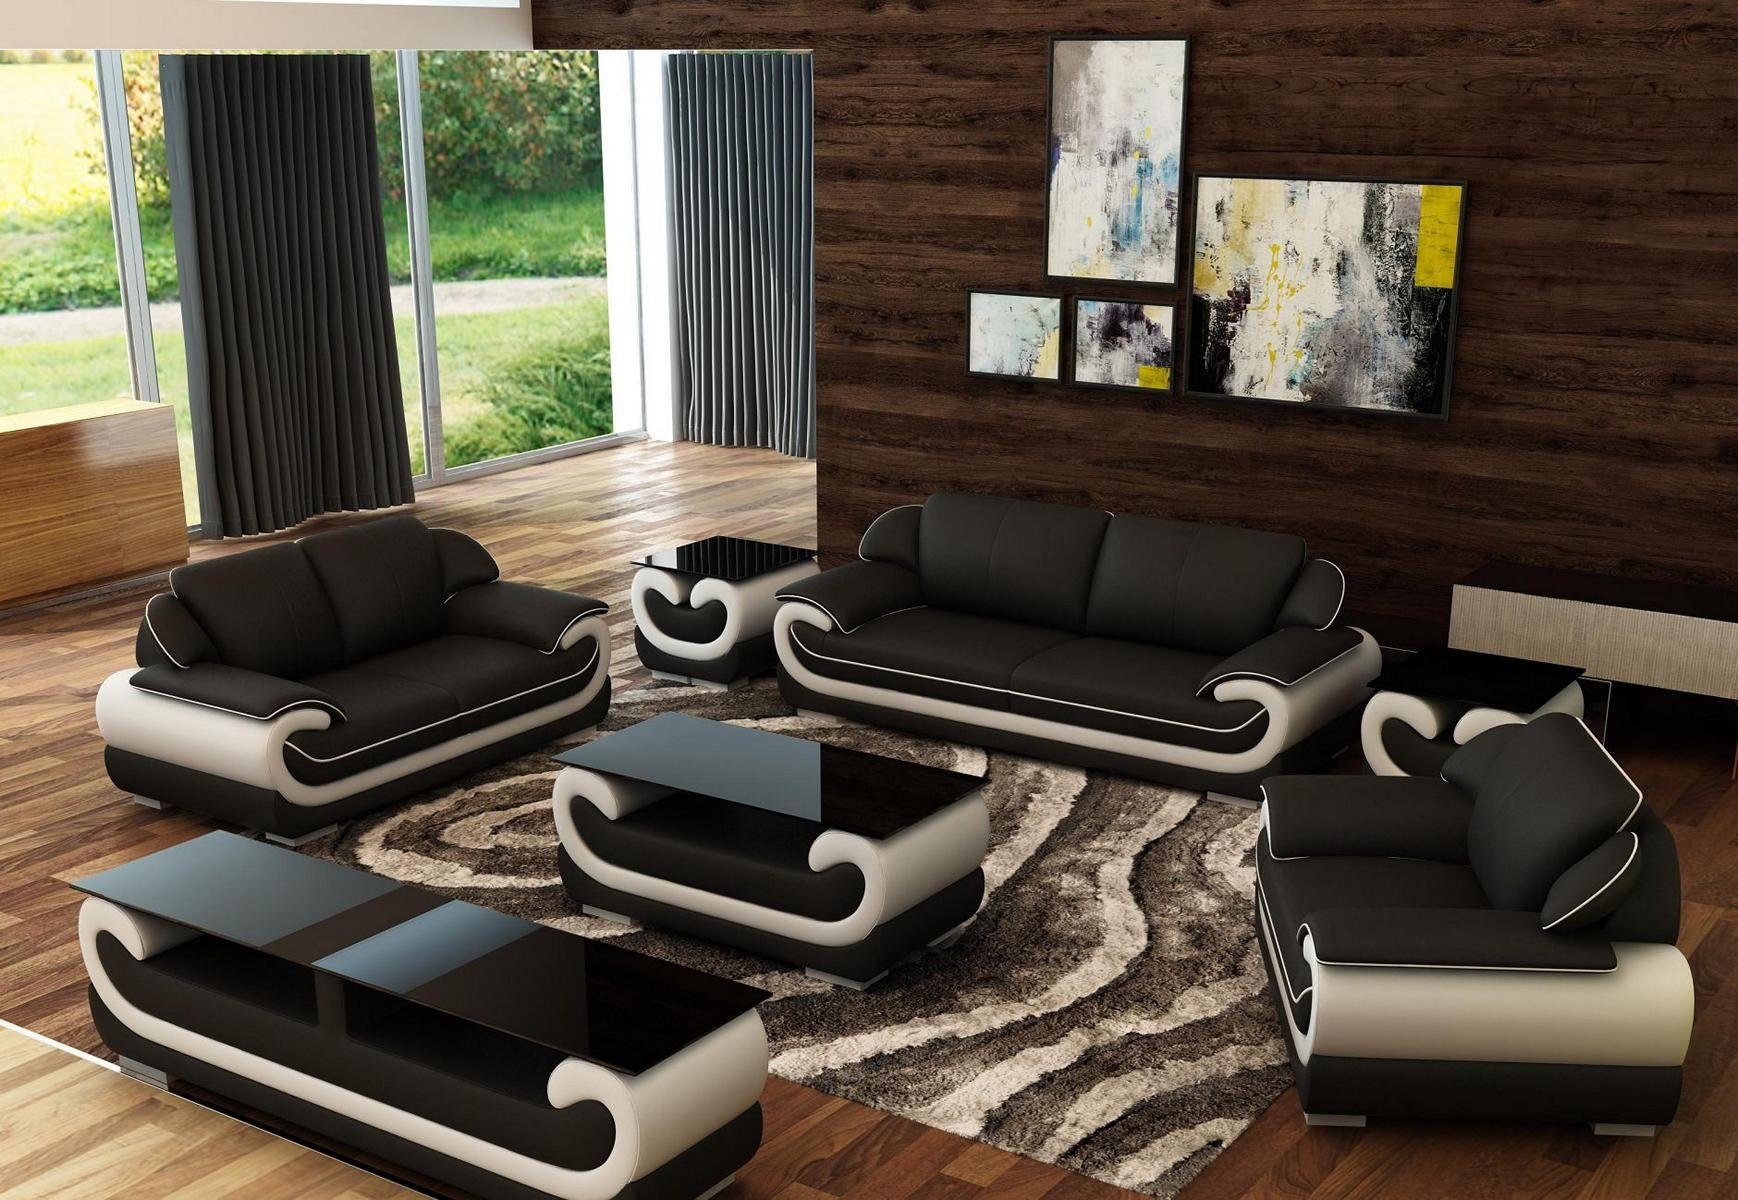 JVmoebel Sofa Ledersofa Made jvmoebel, Sitzer Couch in Wohnlandschaft Modern Schwarz/Beige Design Europe 3+2 Sofa